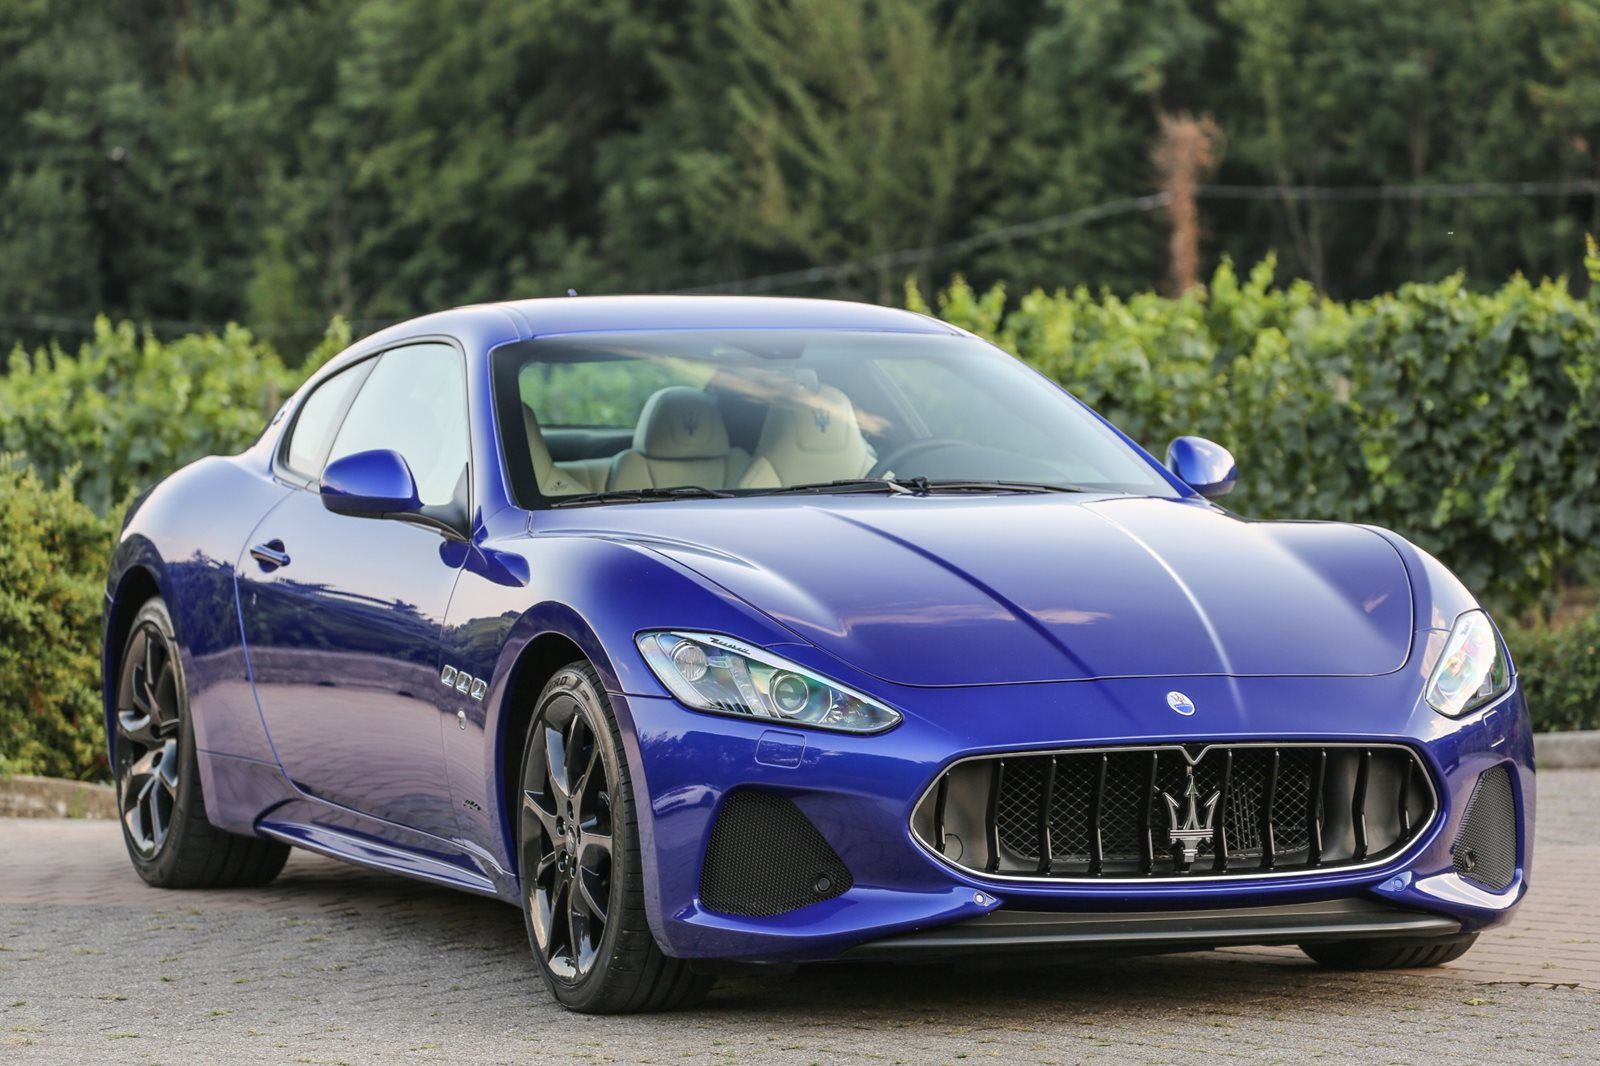 Maserati-GranTurismo